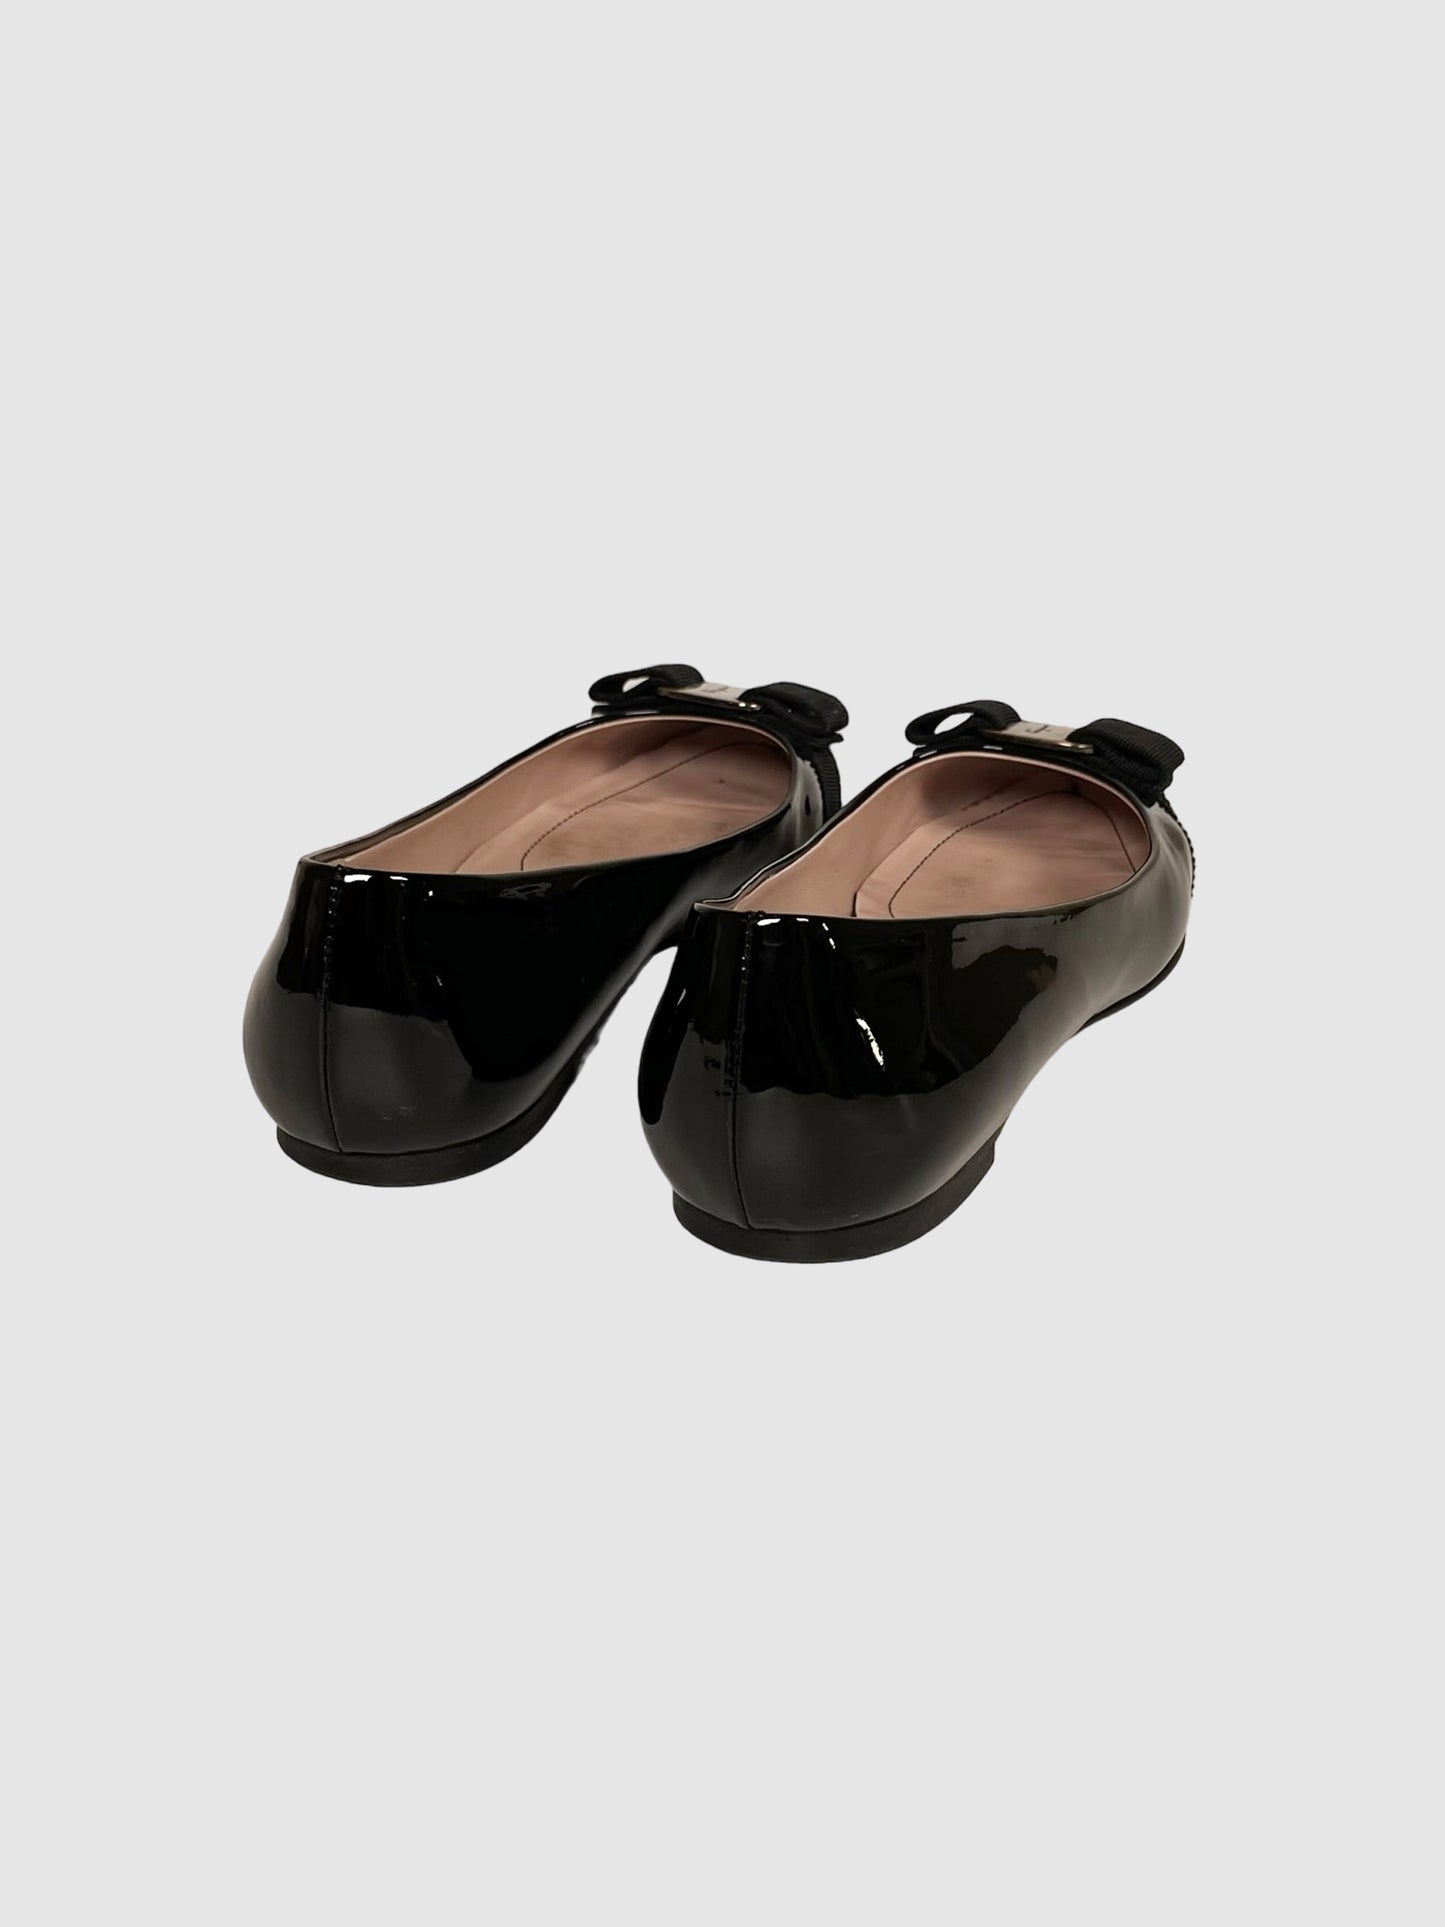 Salvatore Ferragamo Patent Ballet Flats - Size 8.5